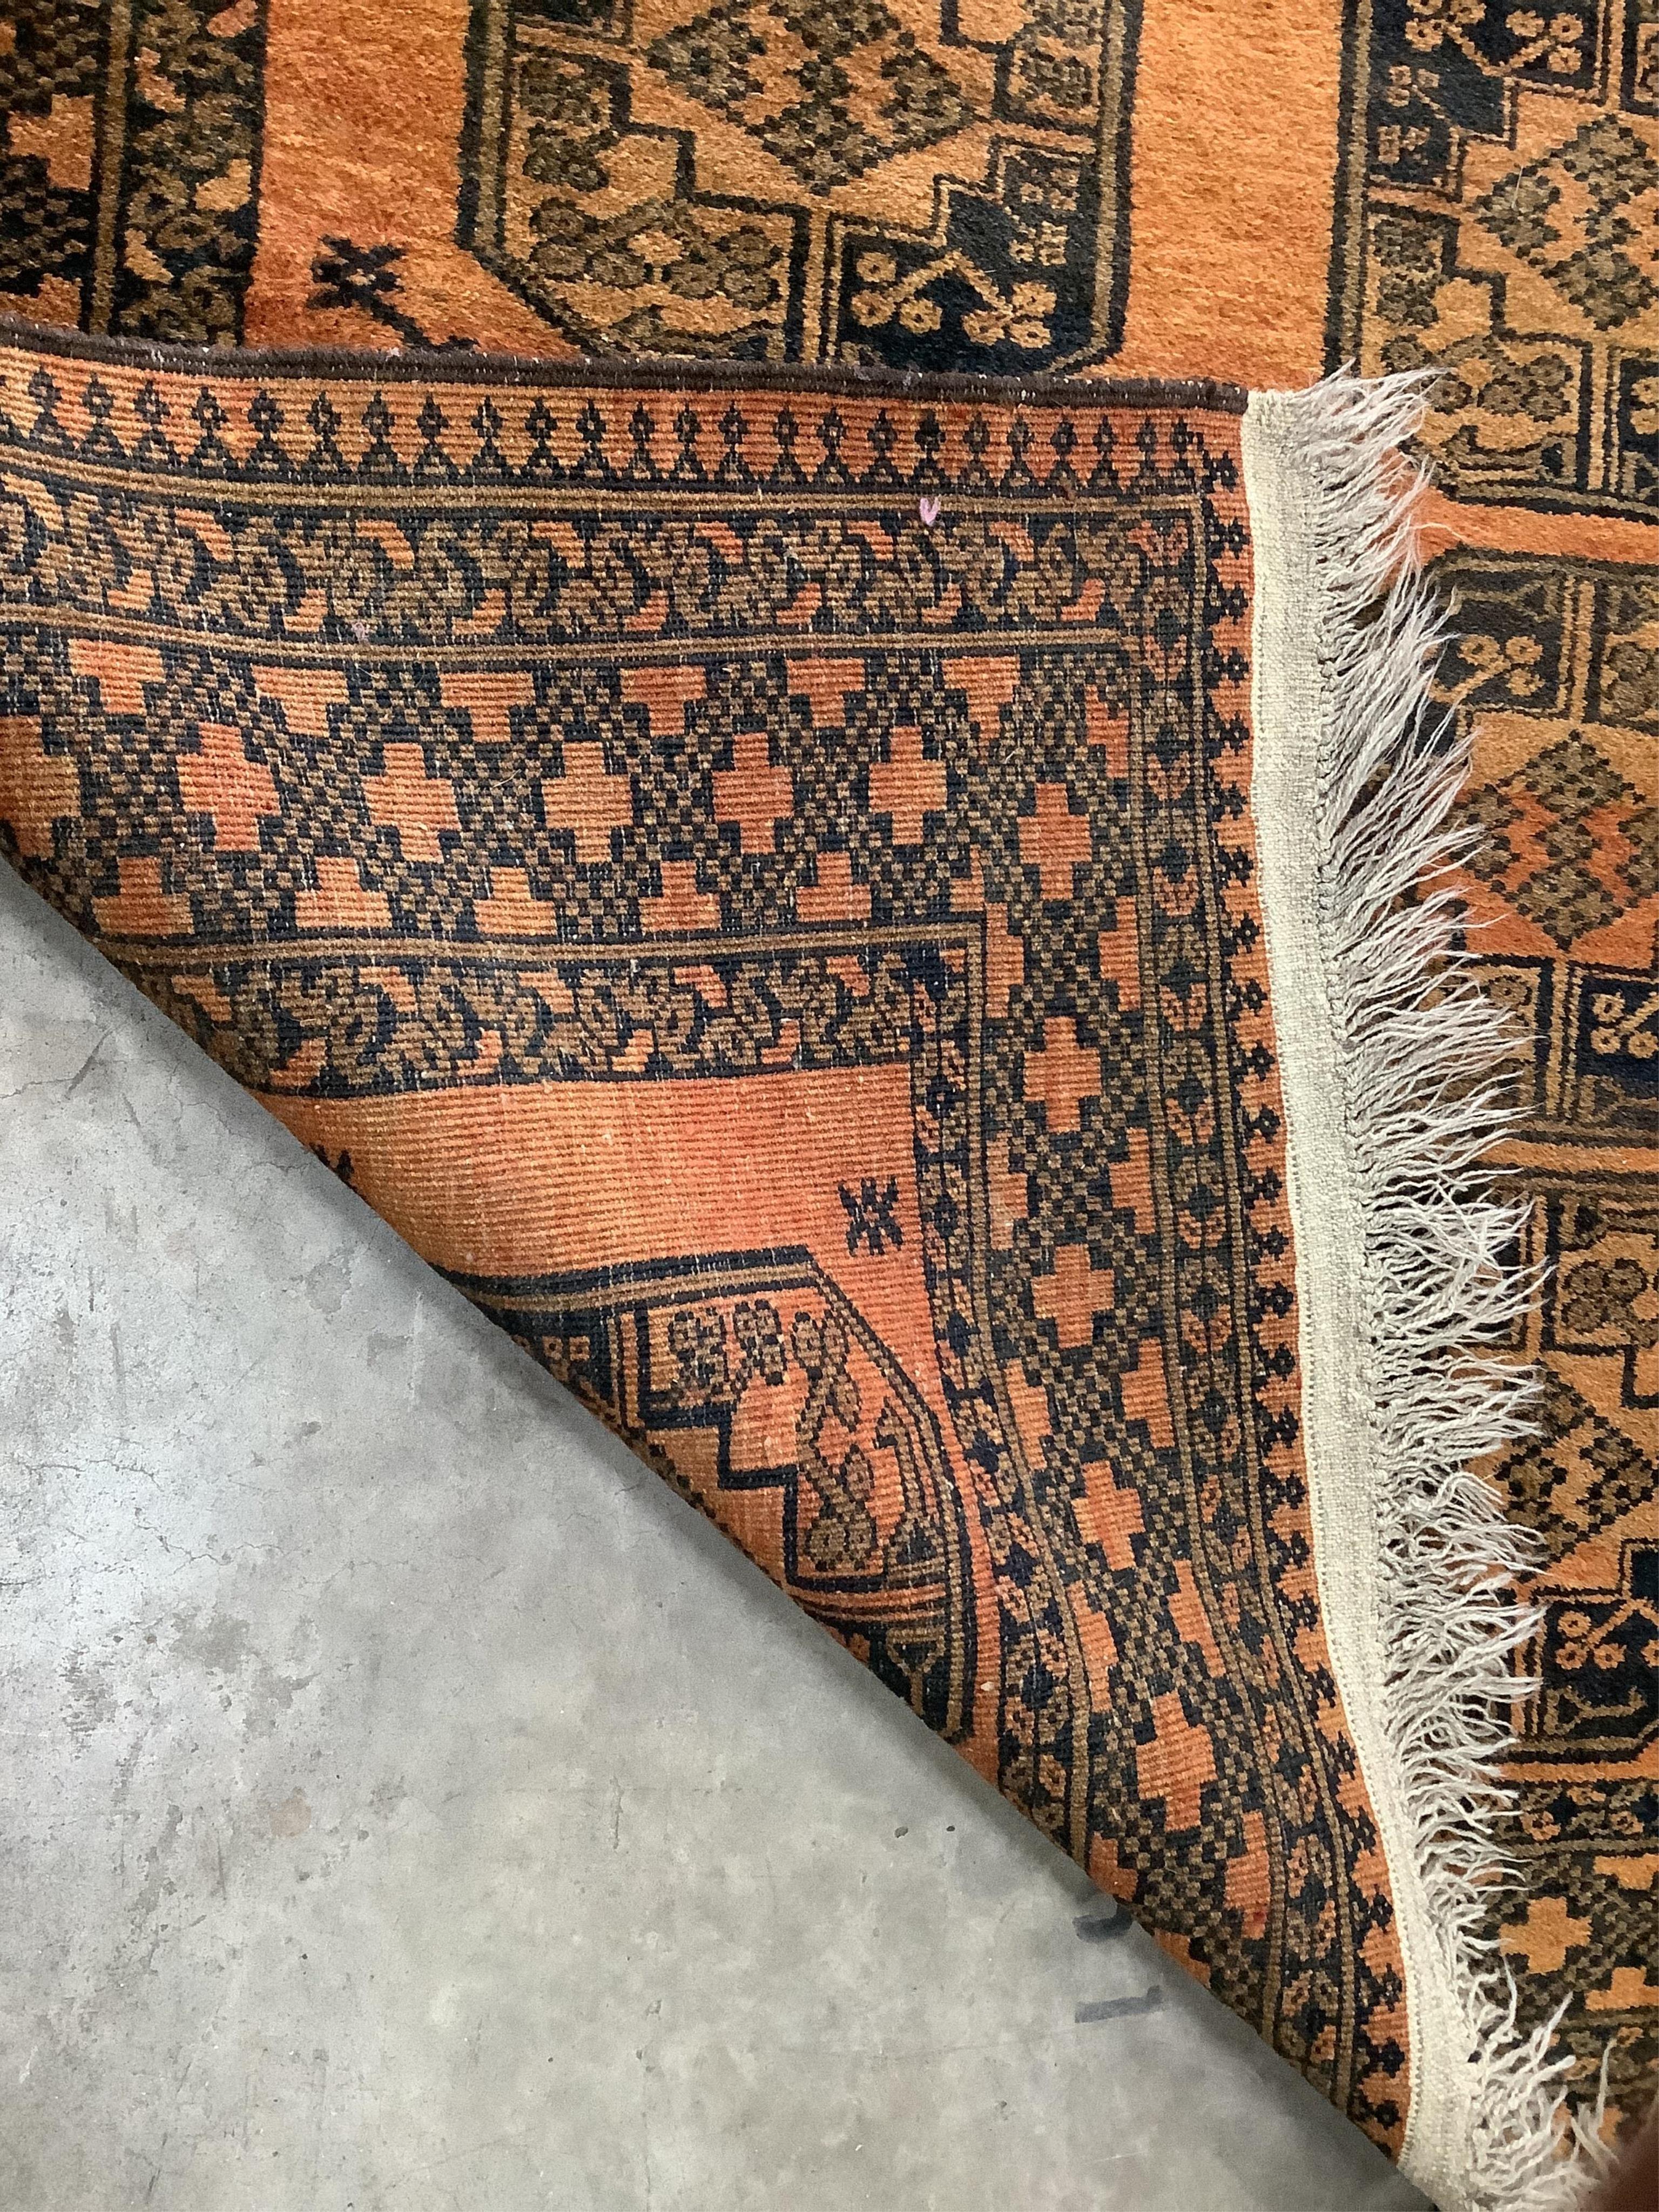 An Afghan gold ground rug, 200 x 154cm. Condition - fair